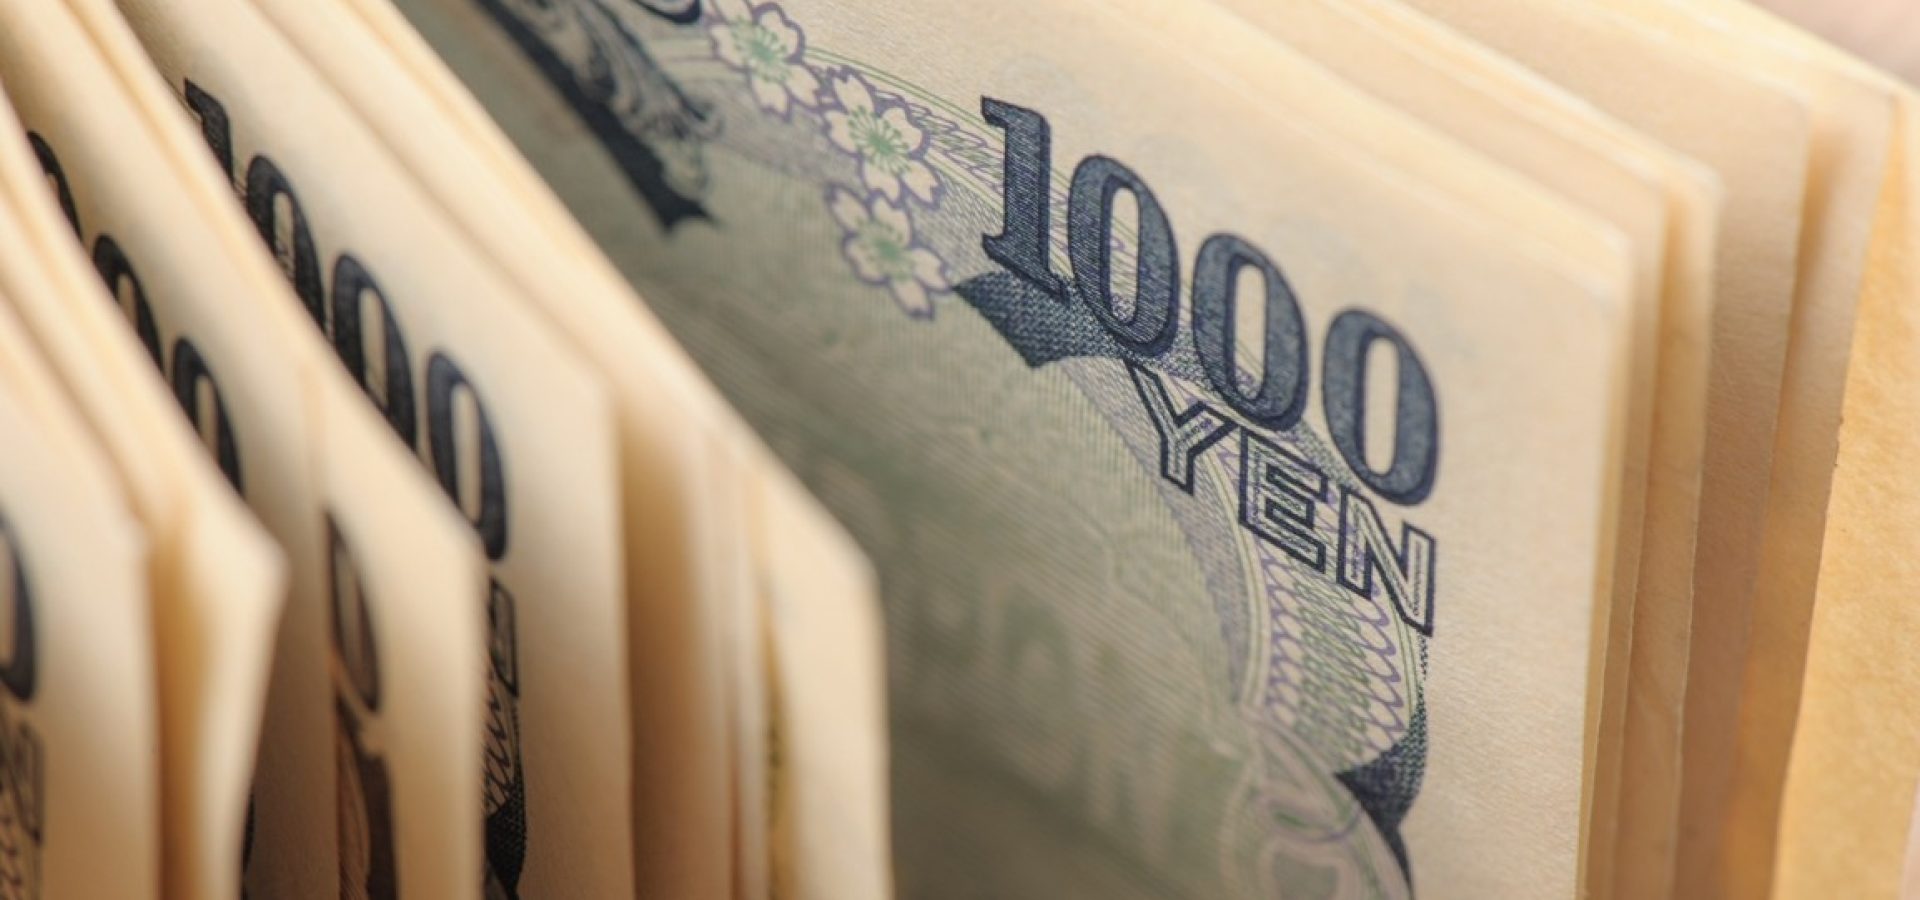 Japan, Japanese Yen and dollar